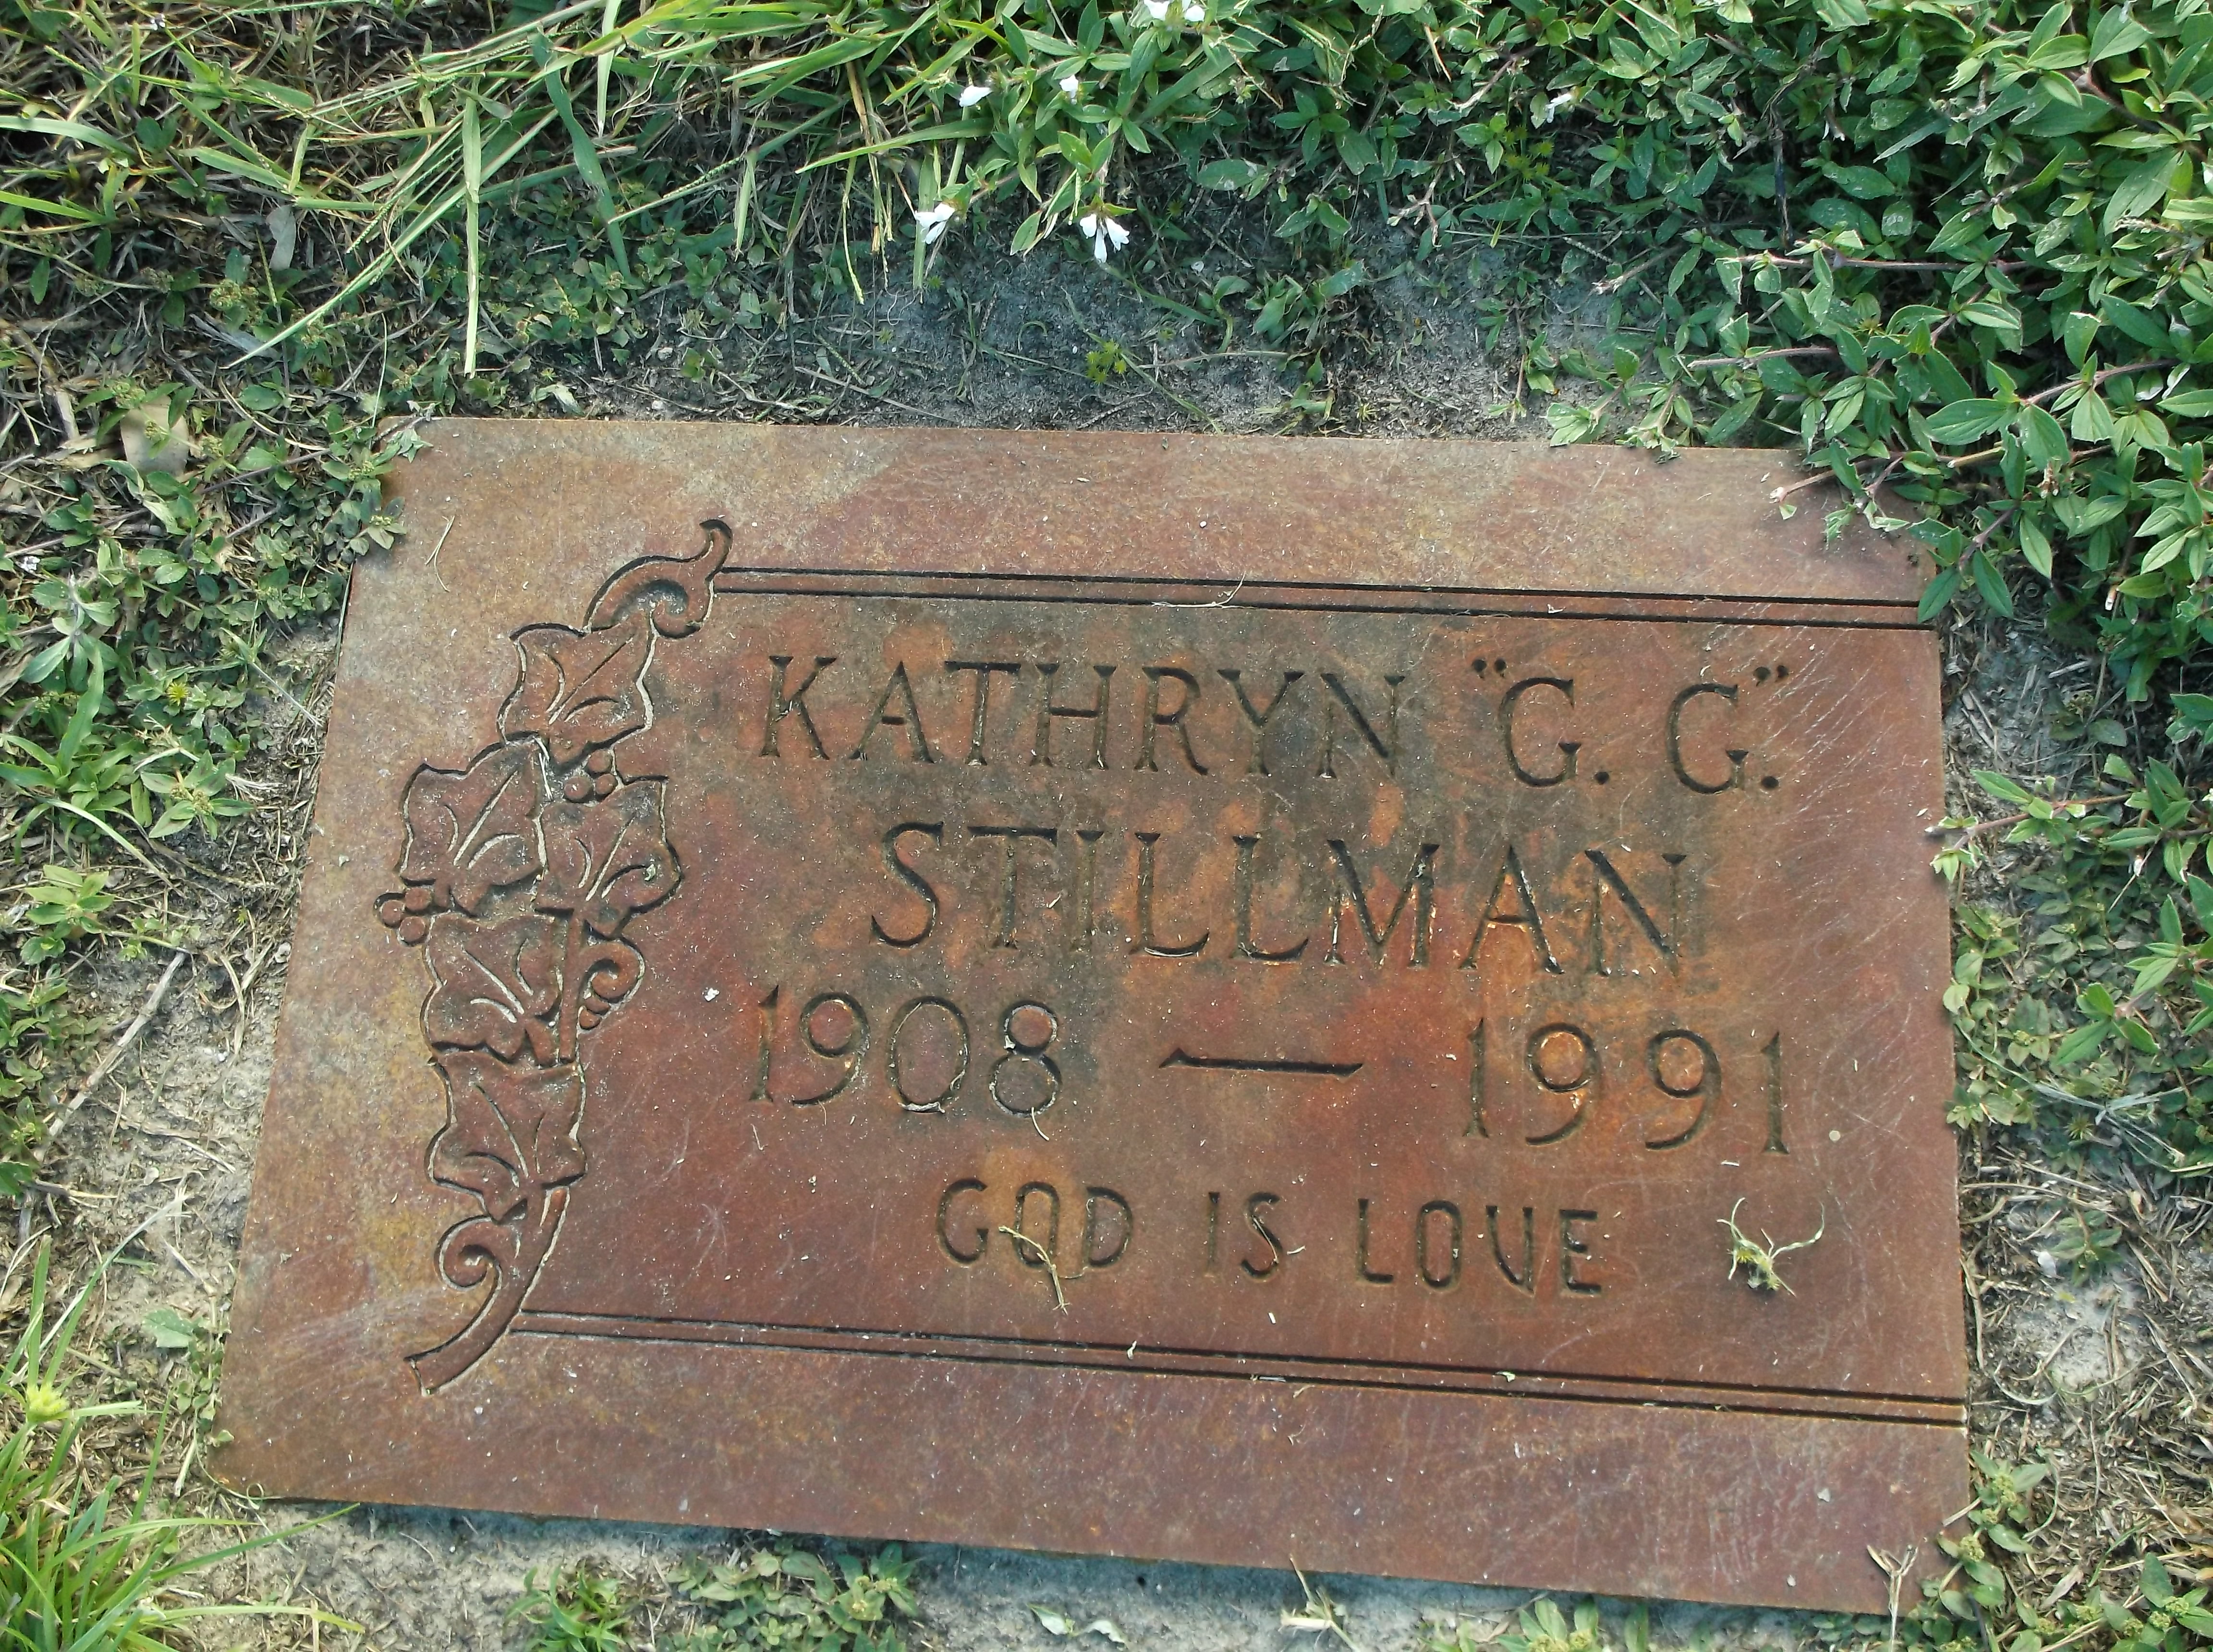 Kathryn "G G" Stillman